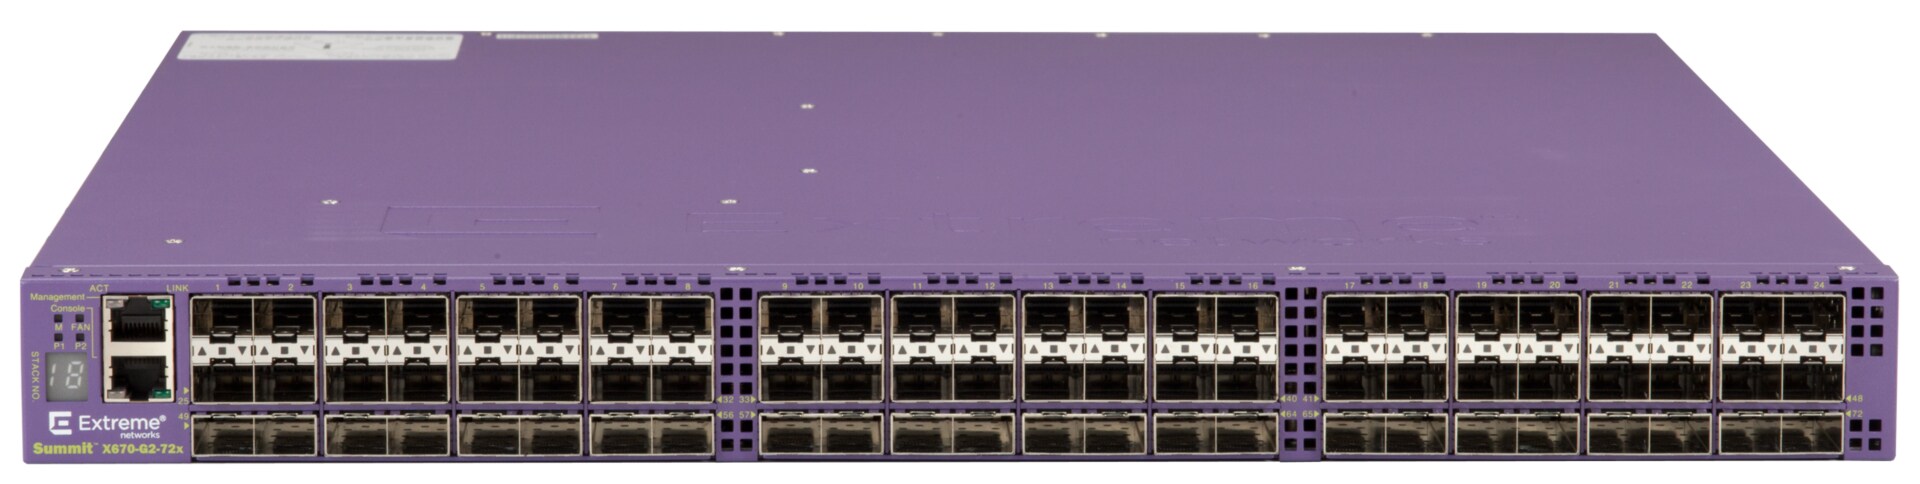 Extreme Networks Summit X670-G2 Series X670-G2-72x-Base-Unit - switch - 72 ports - managed - rack-mountable